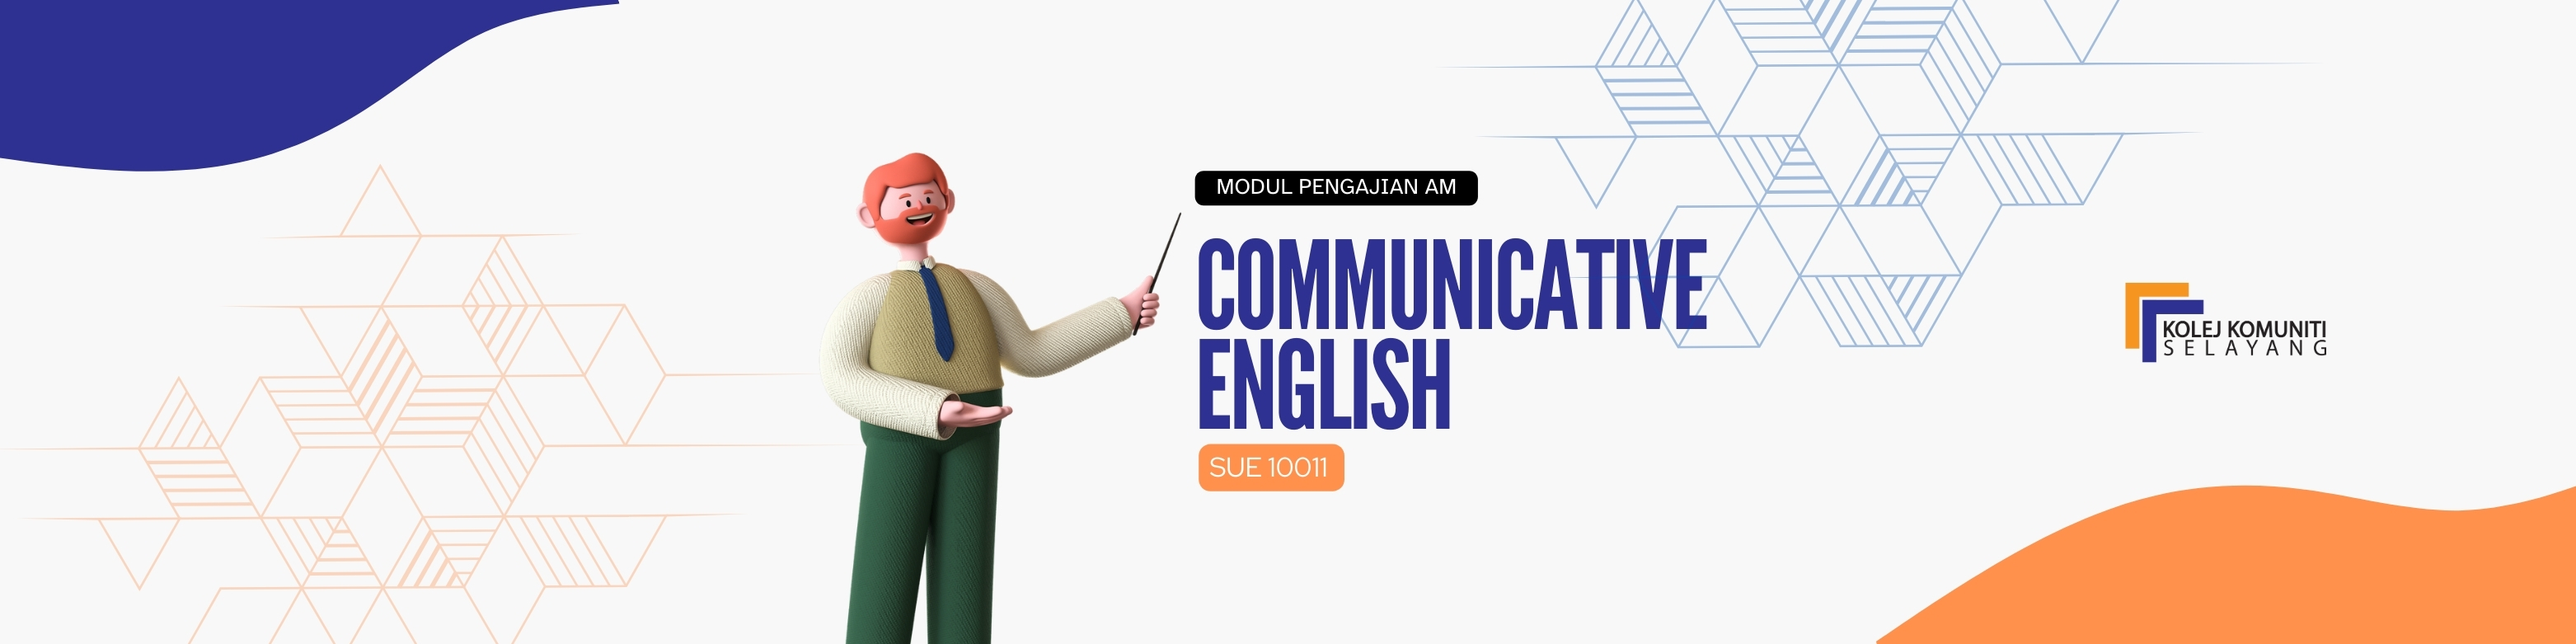 SUE10011 - COMMUNICATIVE ENGLISH